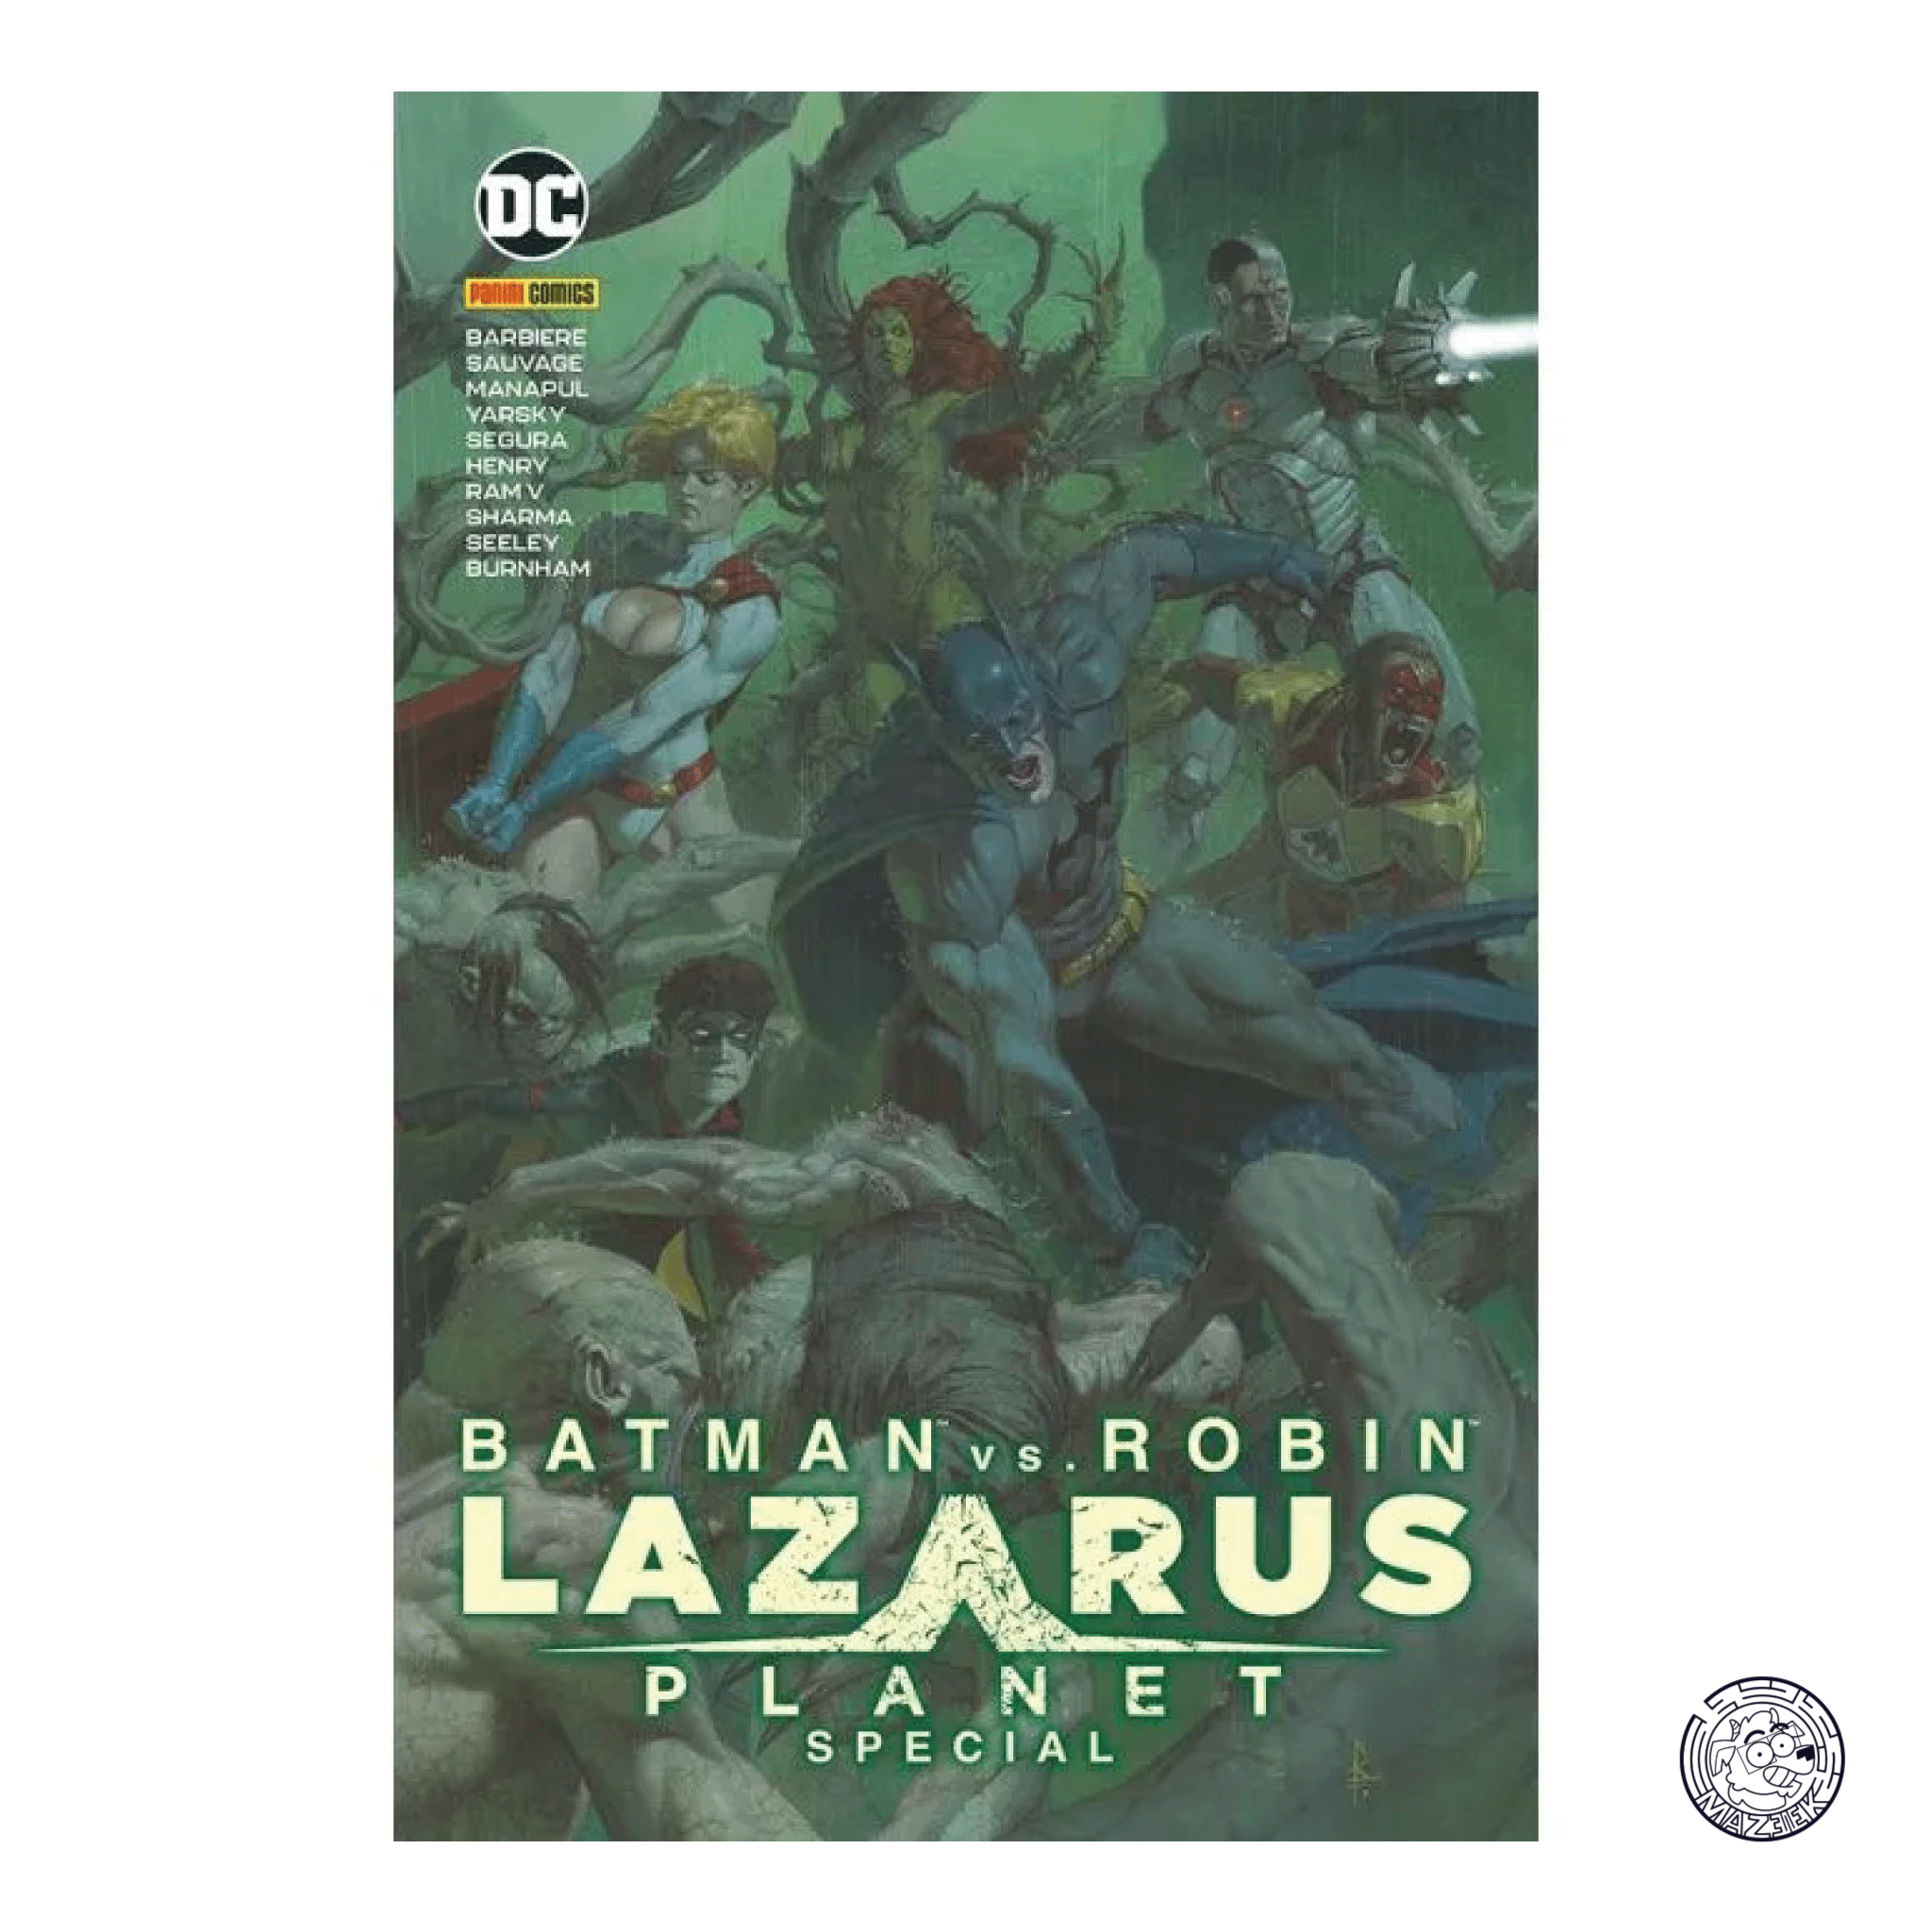 Batman Vs. Robin – Lazarus Planet Special